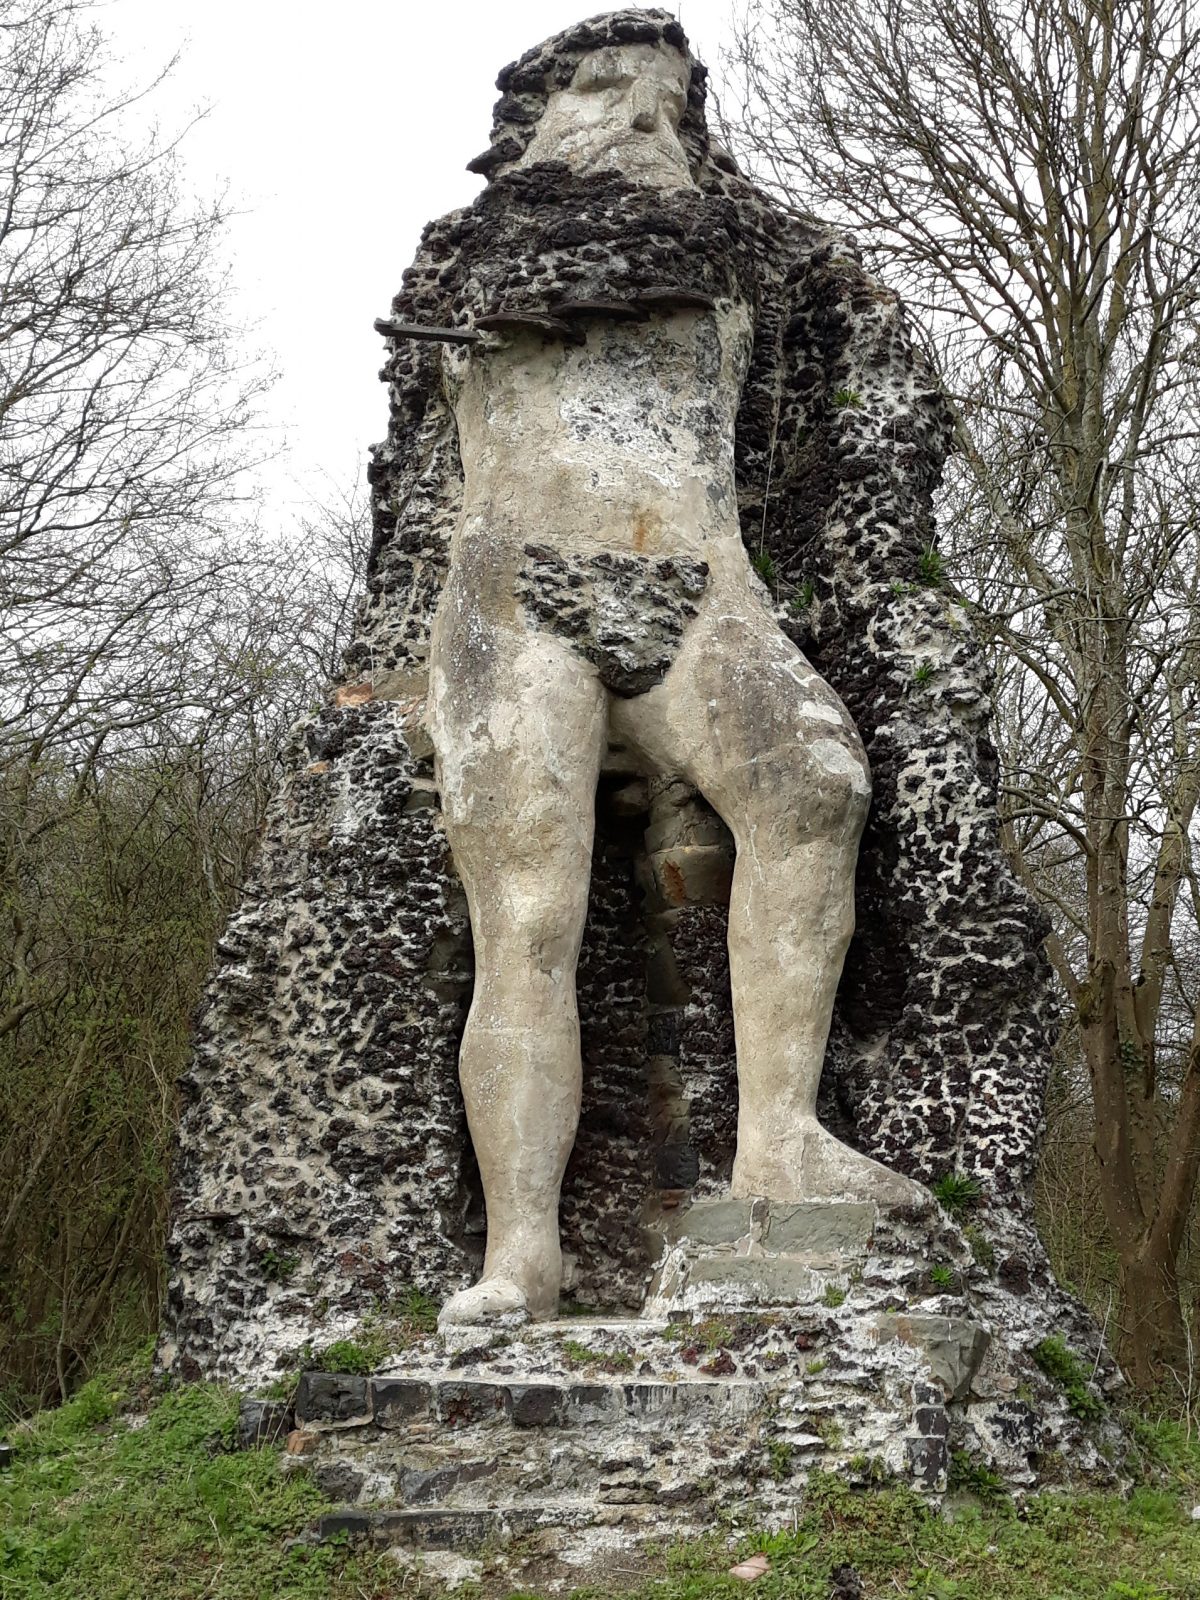 Statue of Neptune at William Champion garden at Warmley